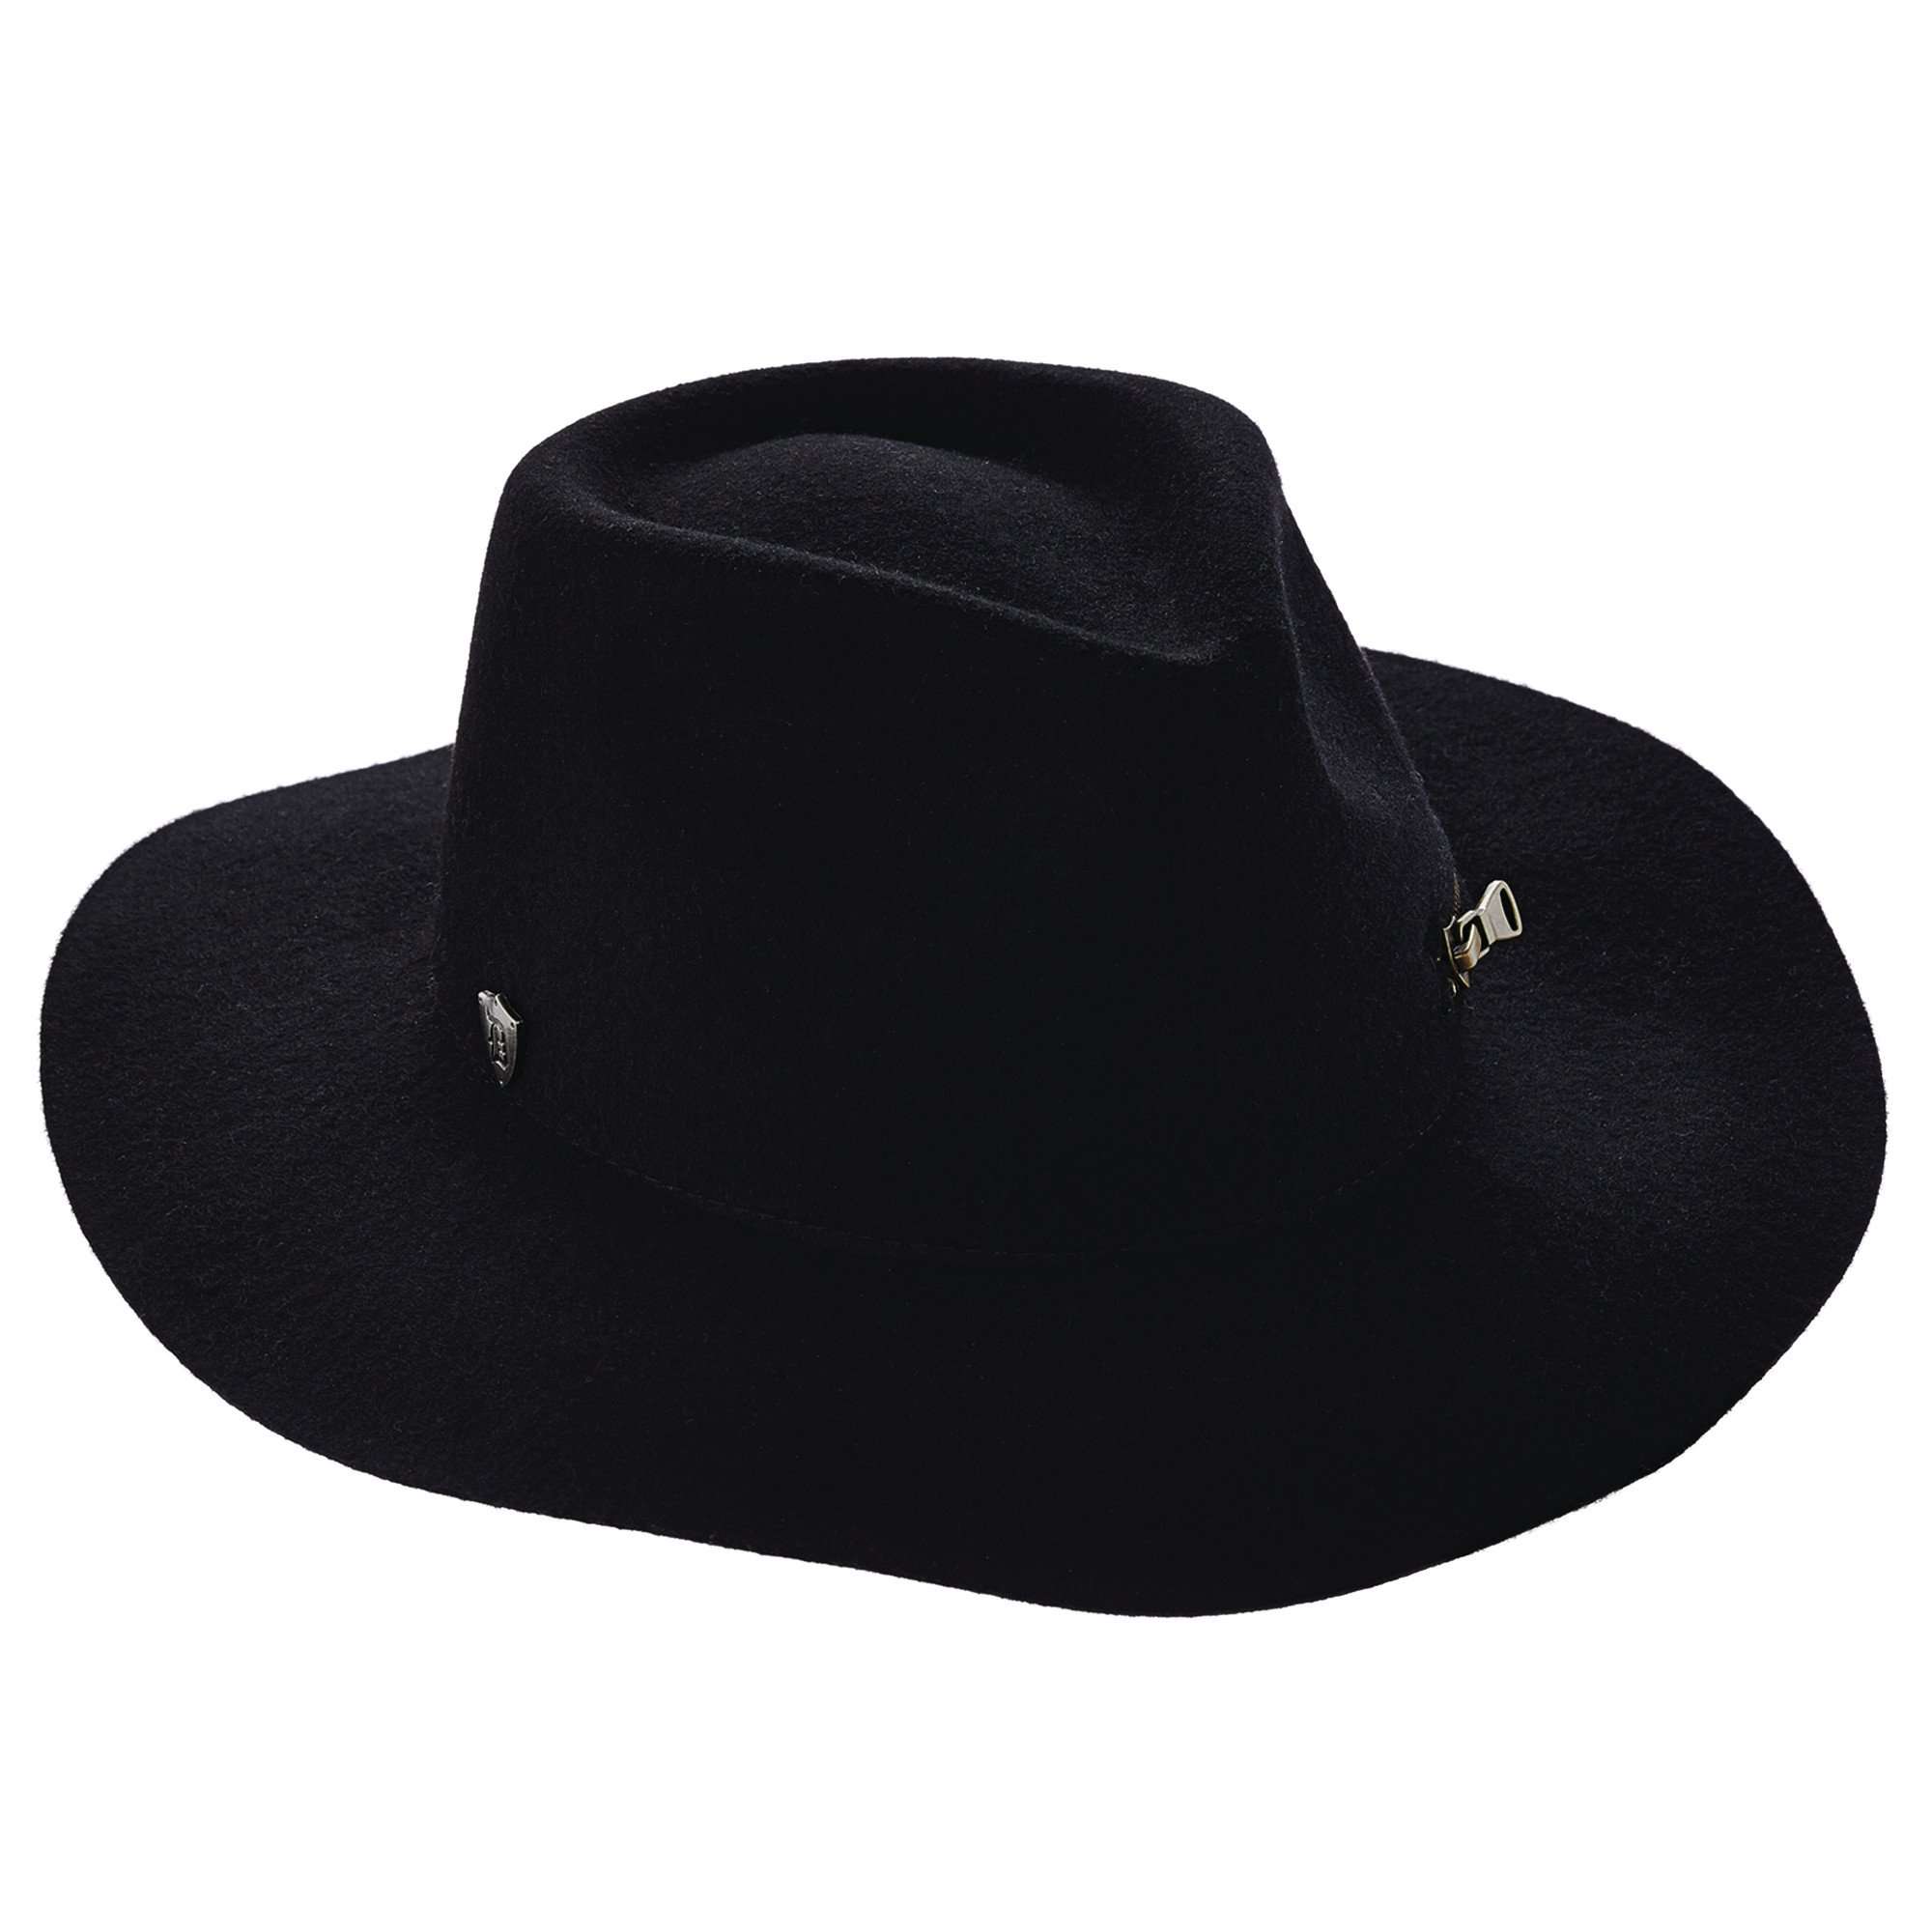 Callanan Hats Wool Felt Safari with Zipper Pocket - Unisex Safari Hat Callanan Hats WWlv370BK Black M/L (58.5 cm) 